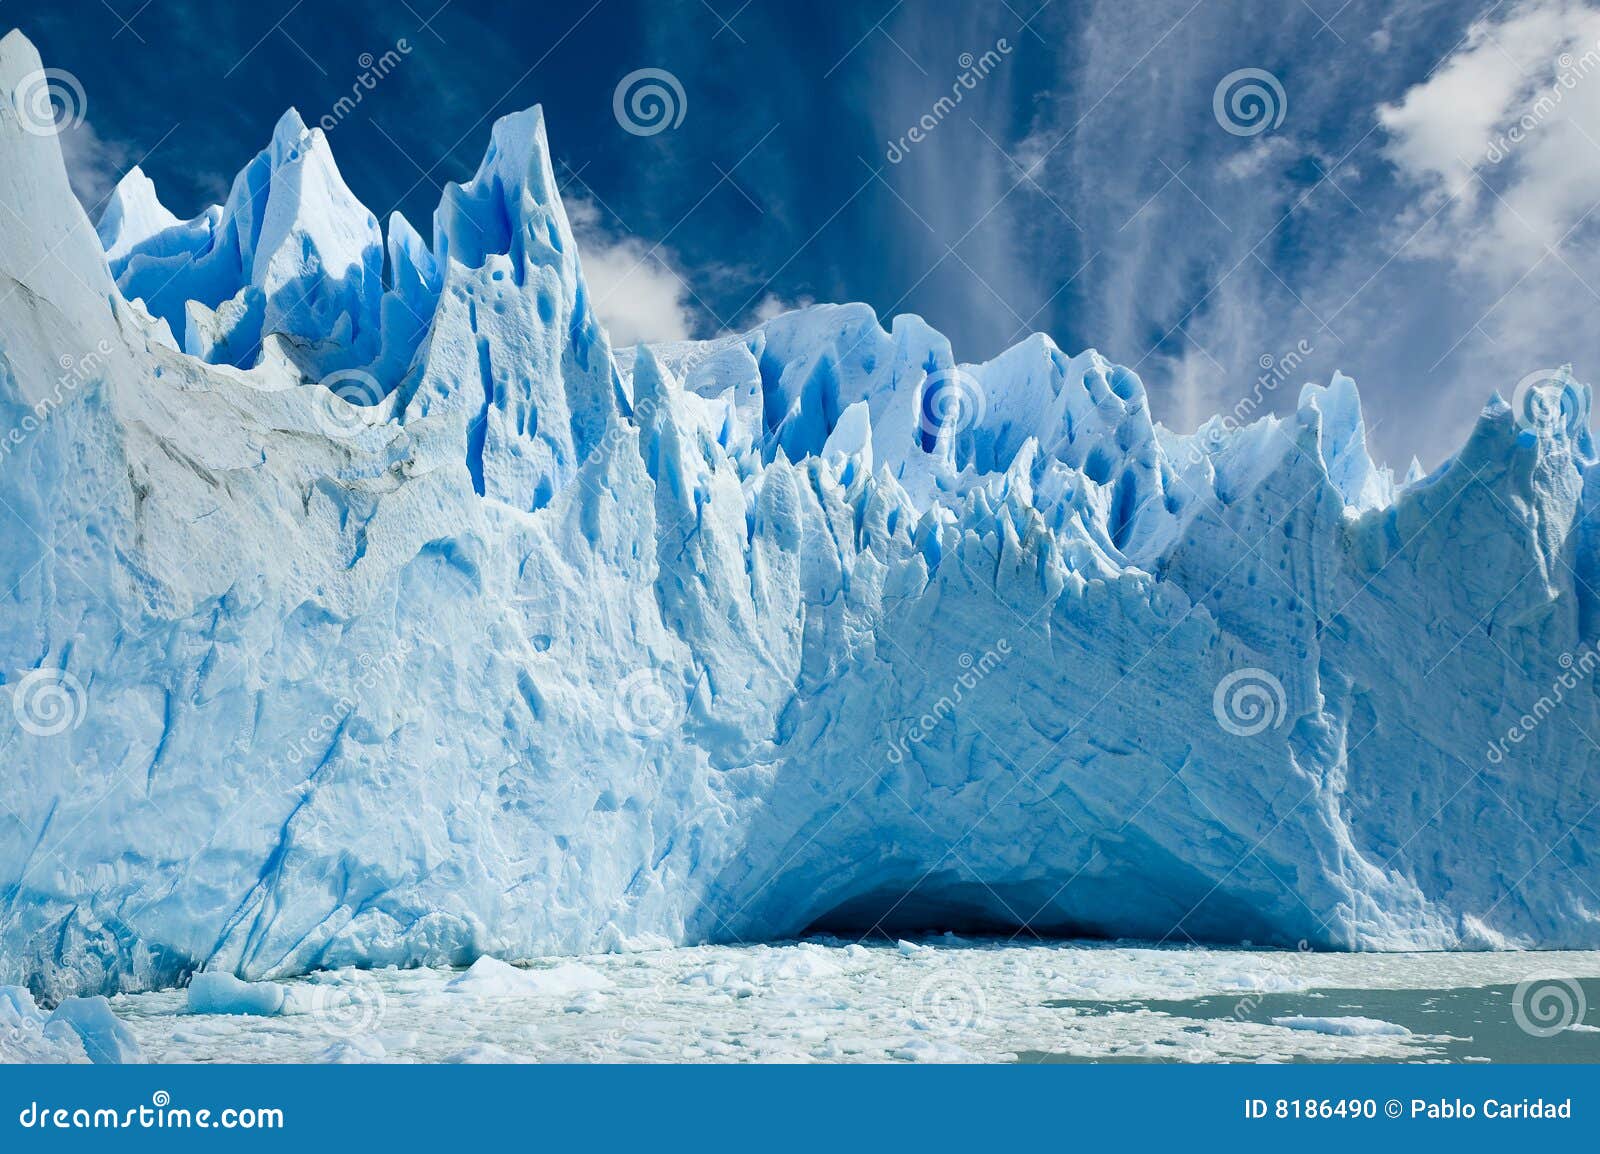 perito moreno glacier, patagonia argentina.